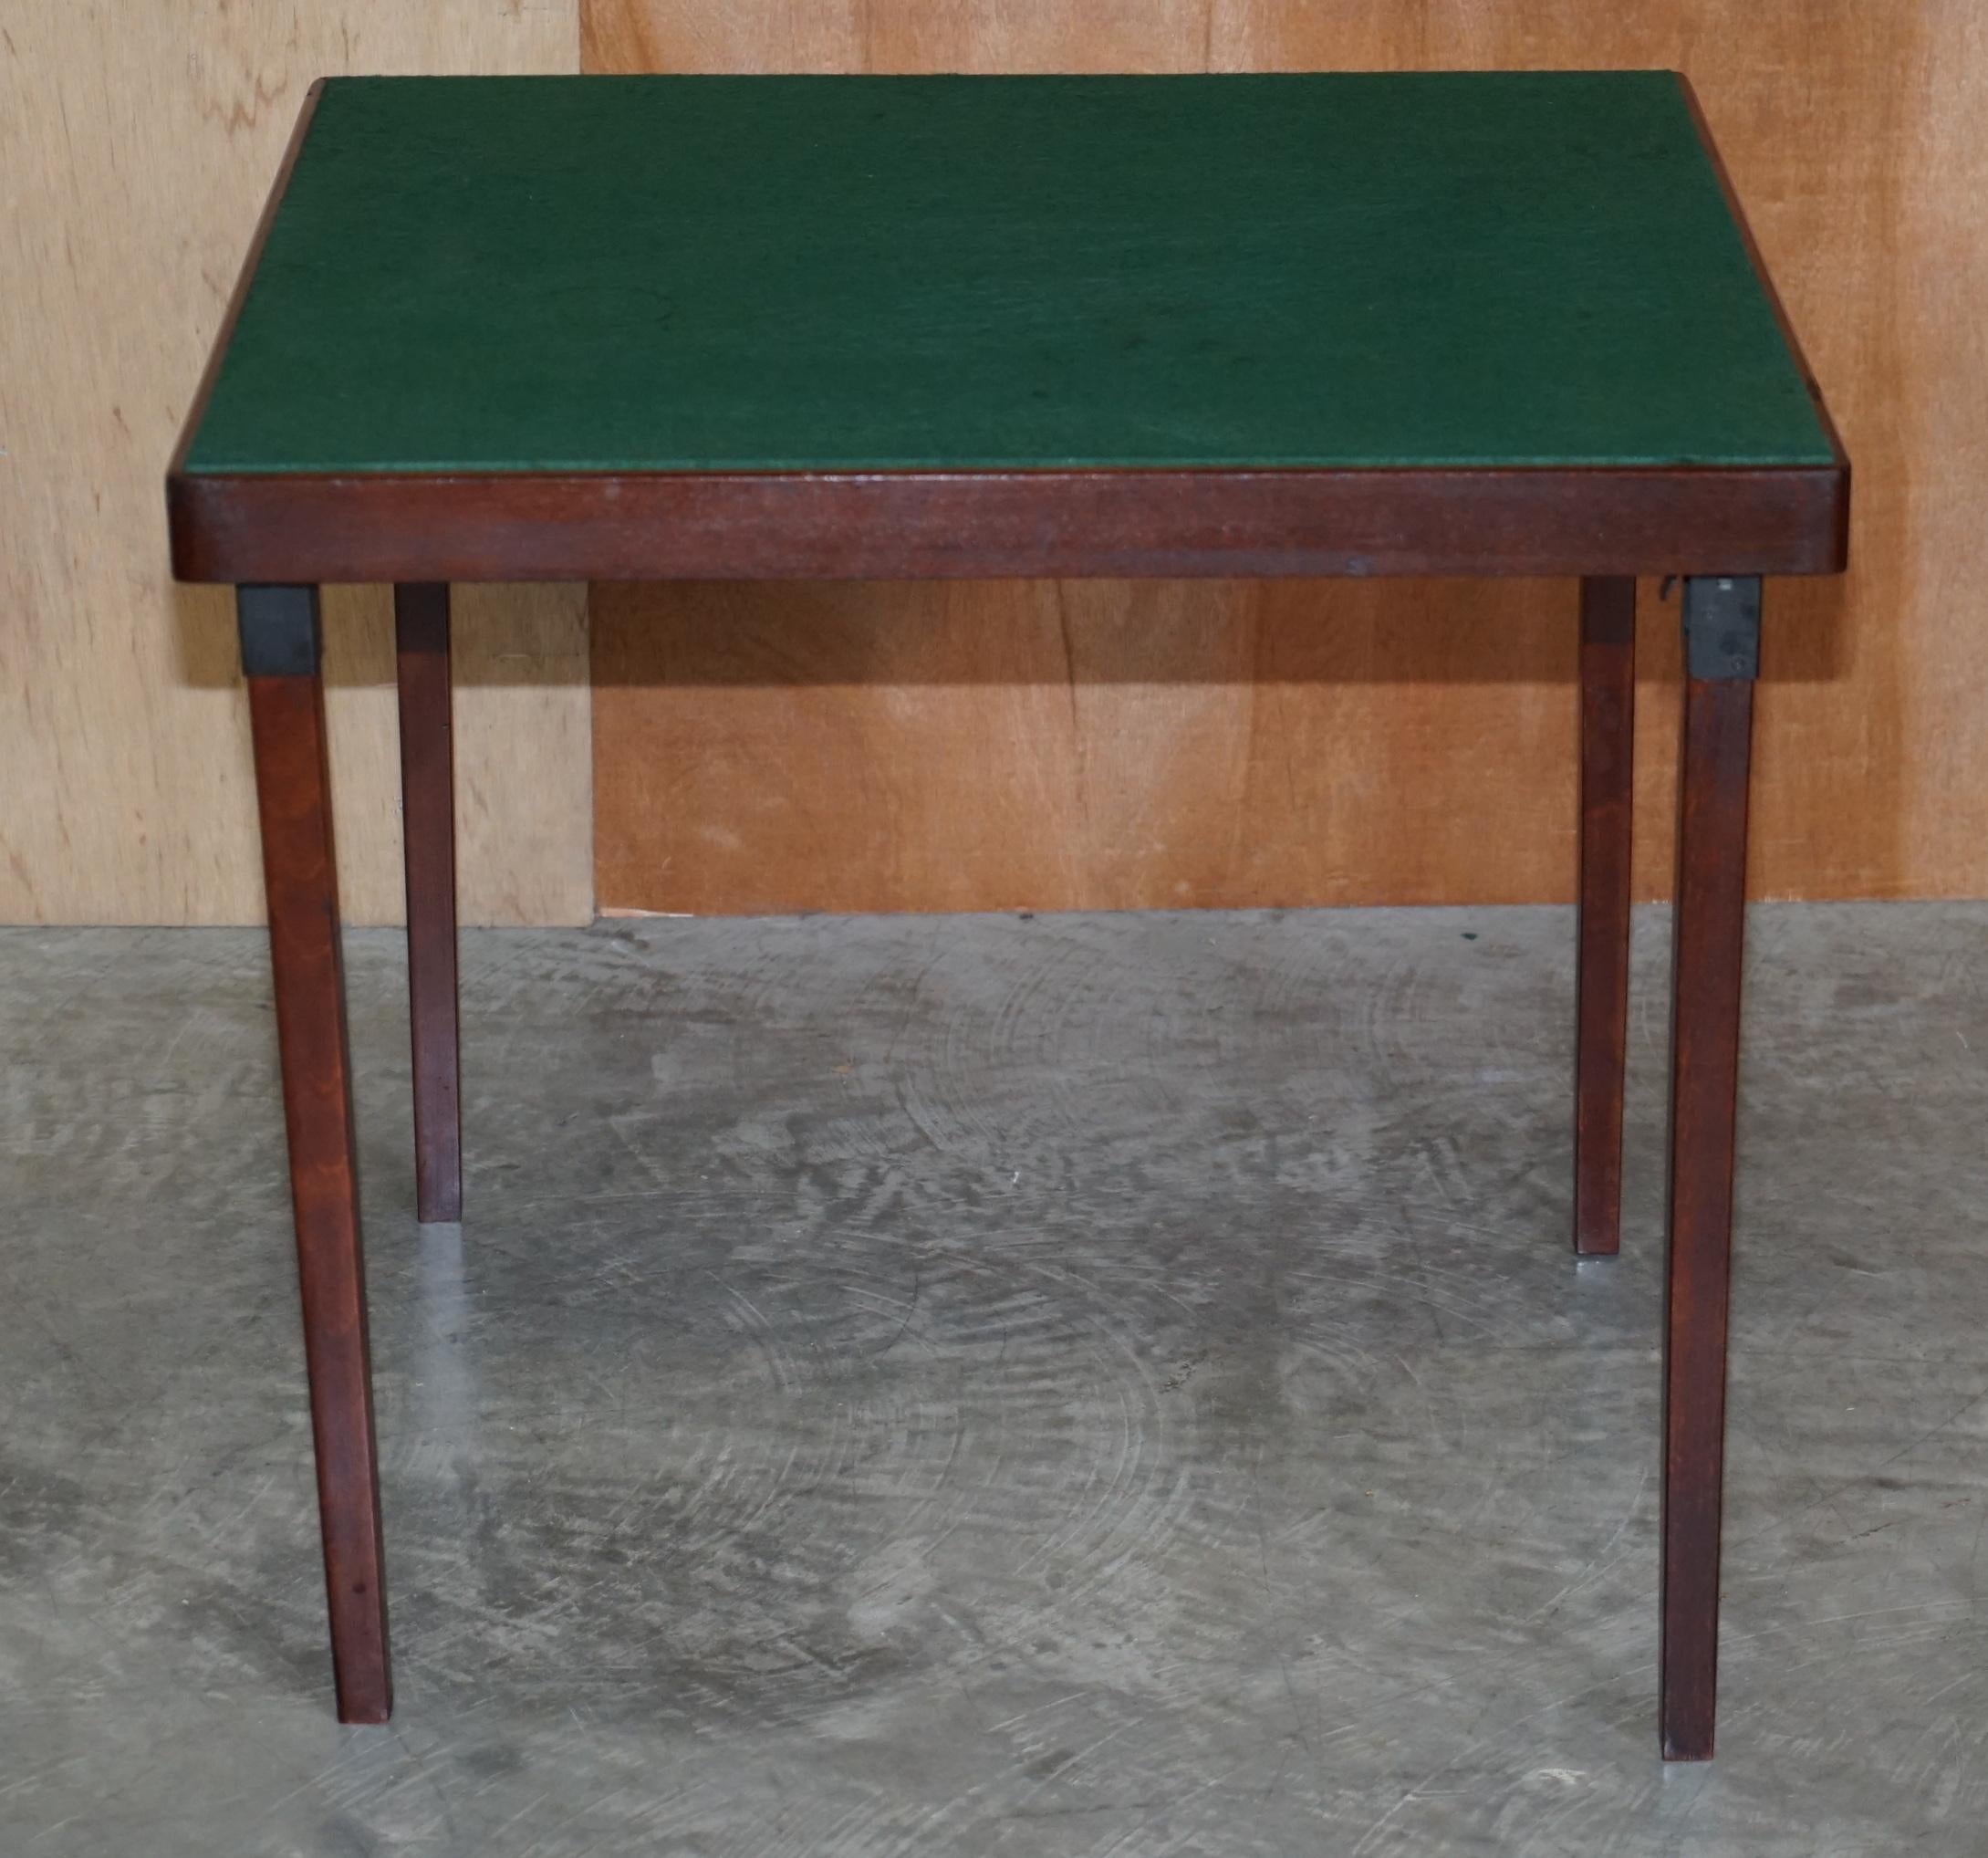 vono foldaway table